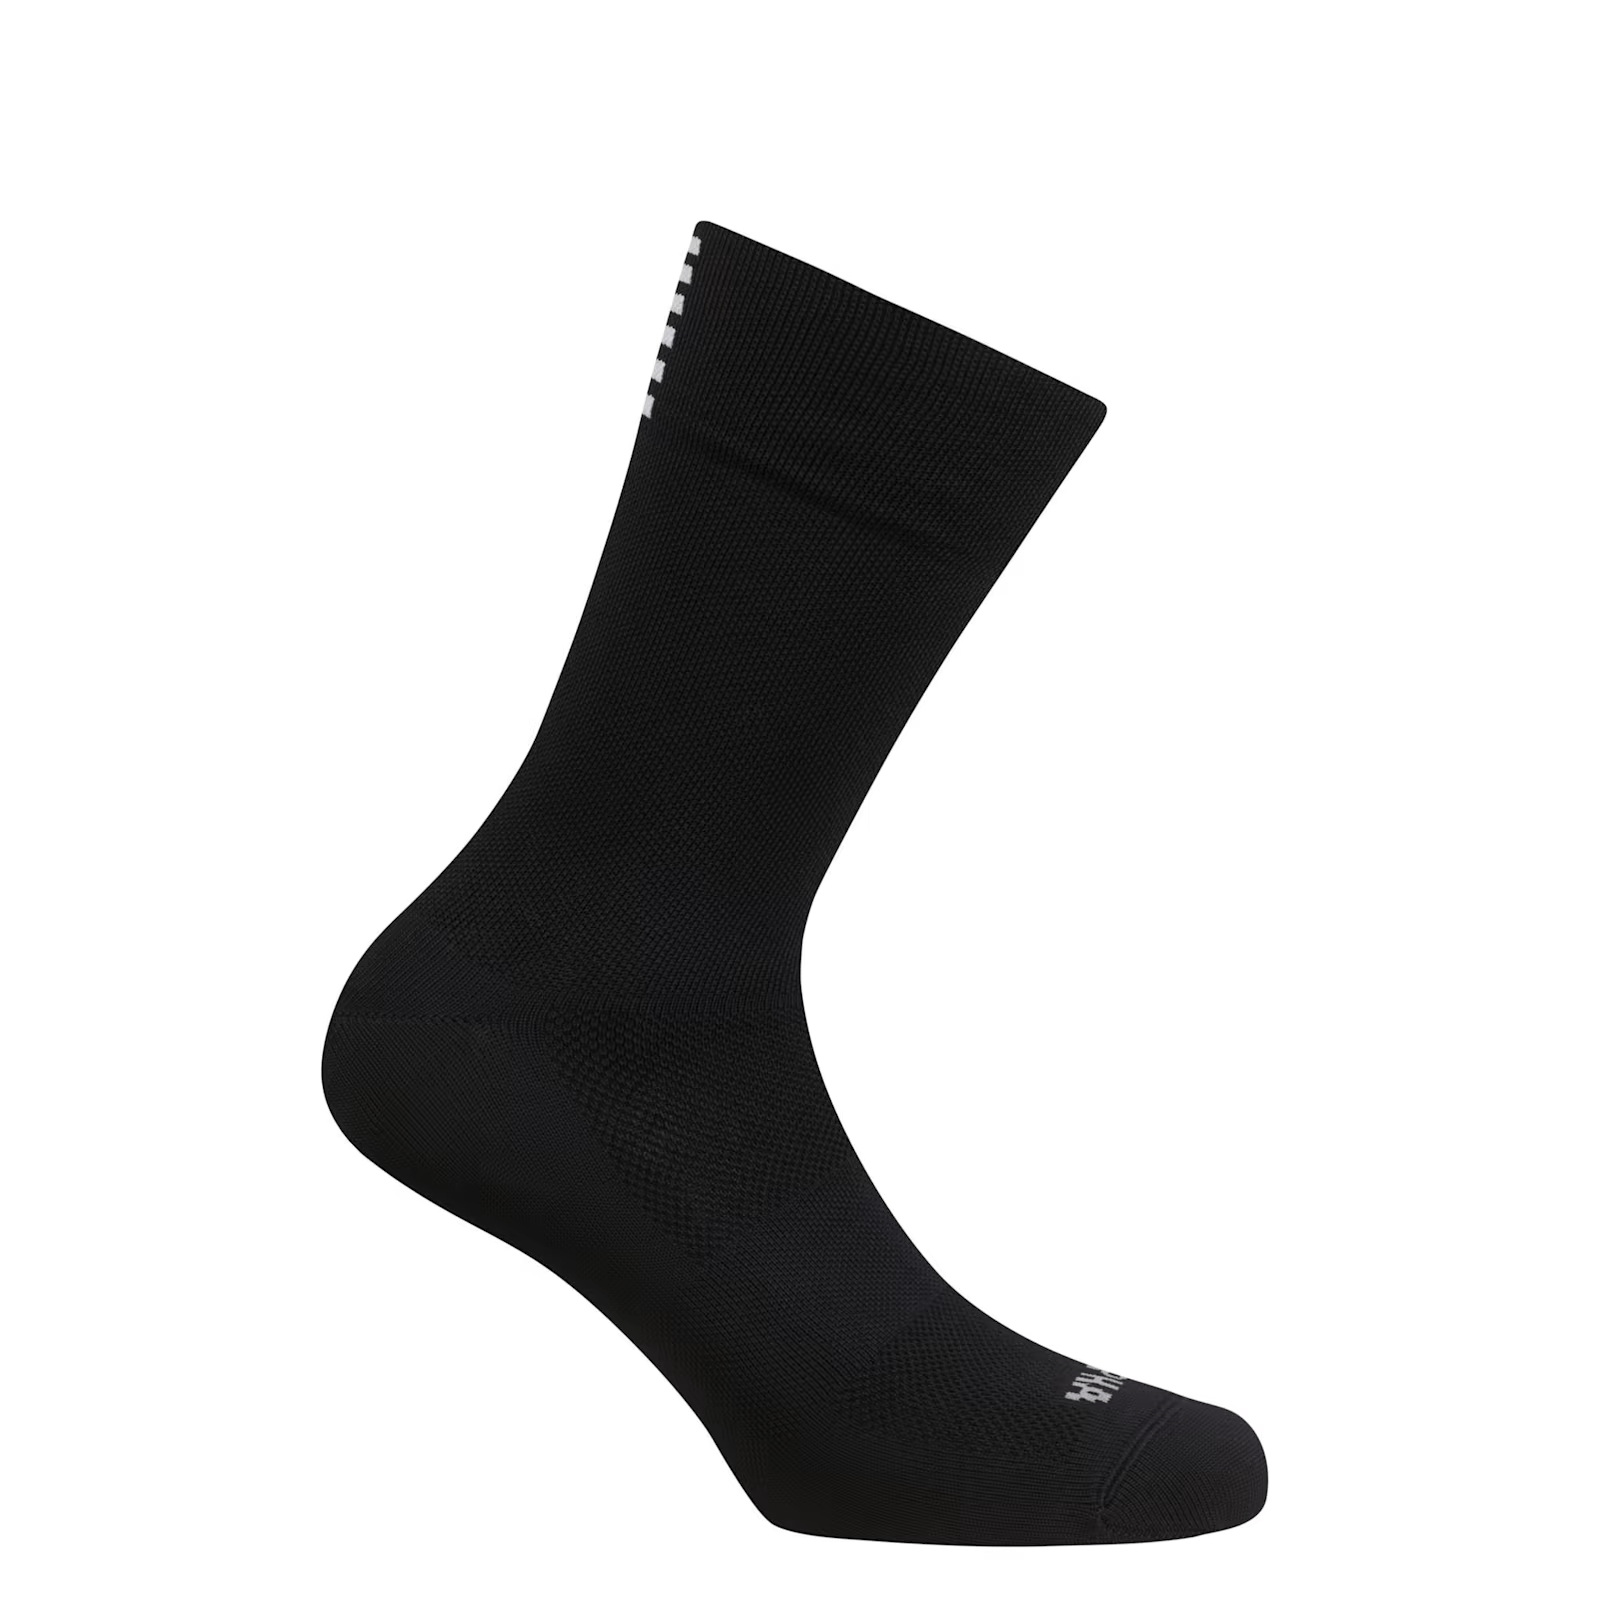 Rapha Pro Team Socks - Regular Black/White / XS Apparel - Clothing - Socks